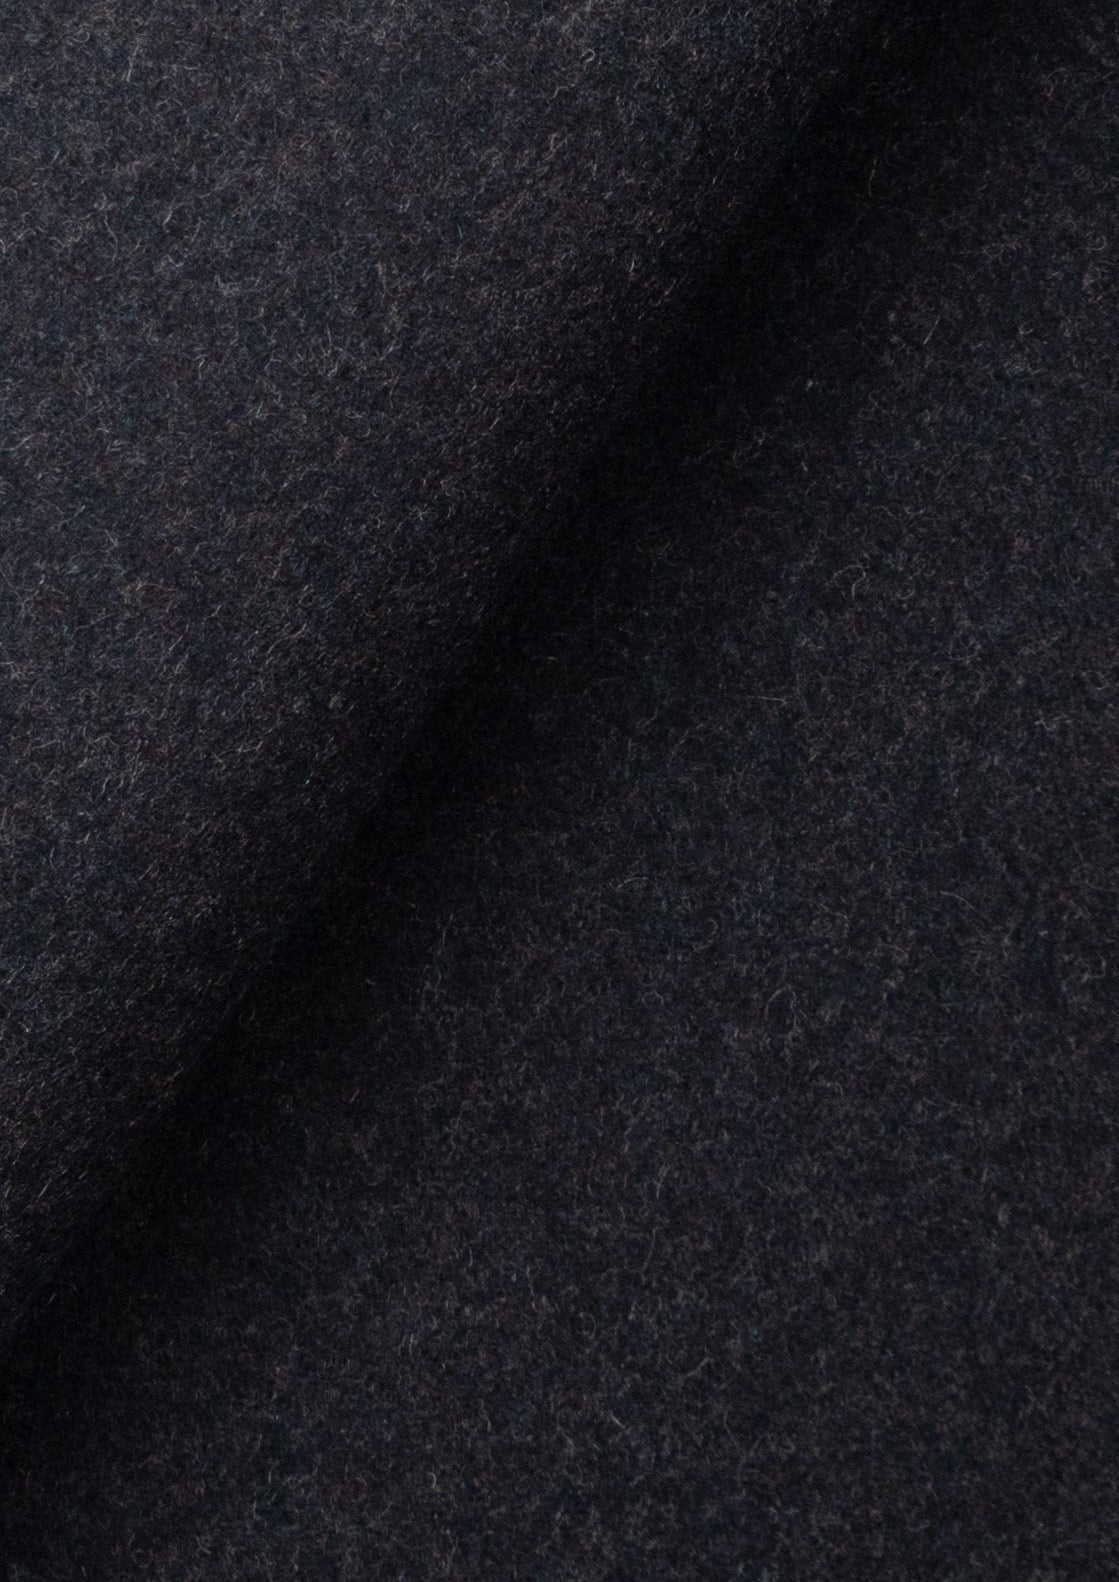 Charcoal Wool Classic Overcoat - SARTORO